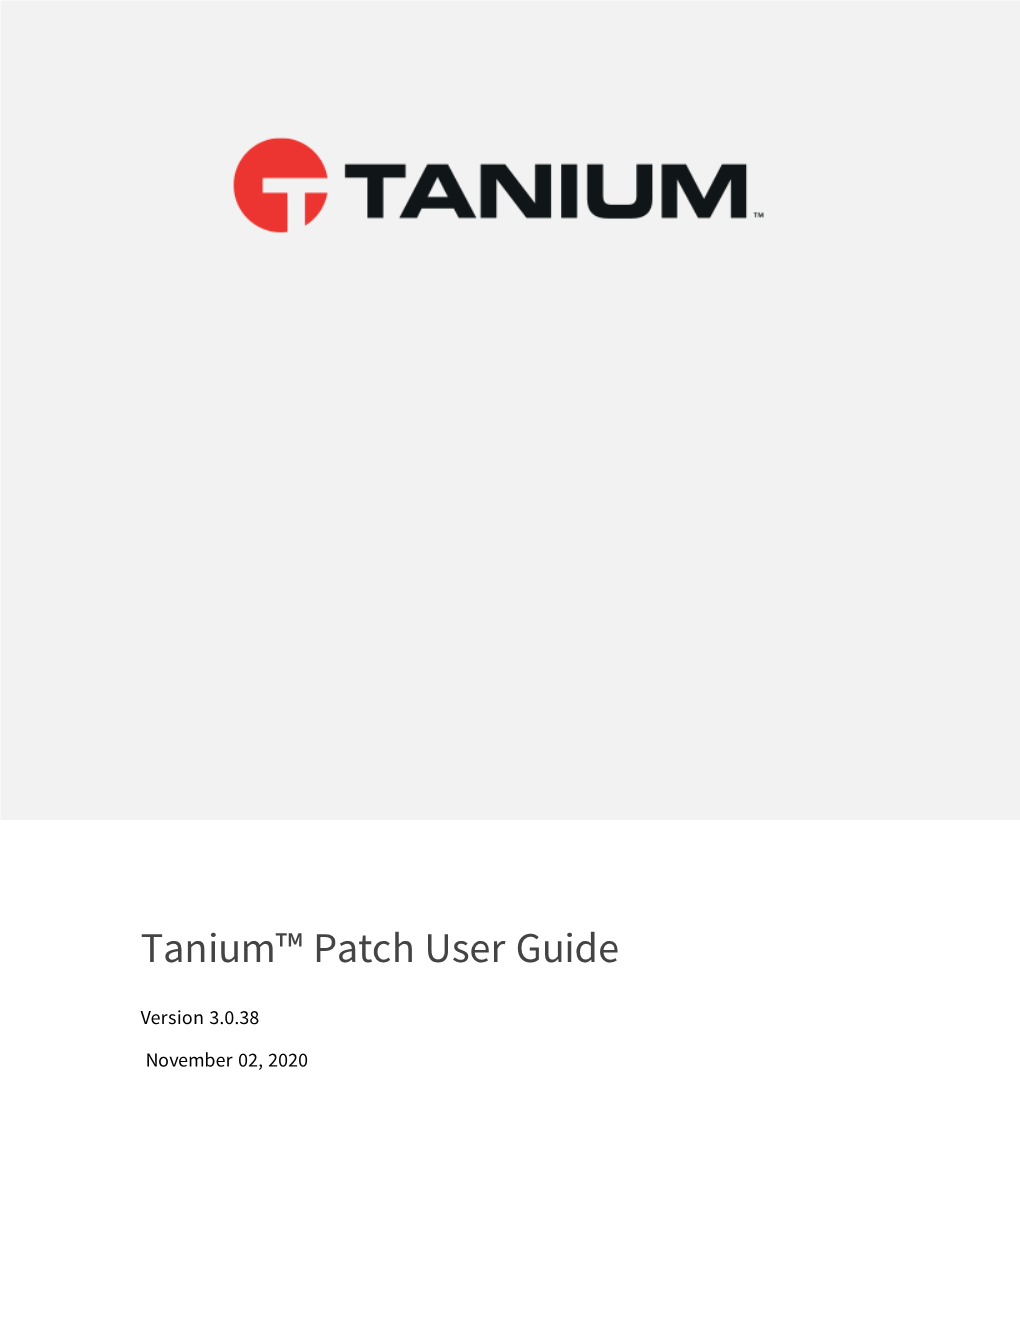 Tanium Patch User Guide